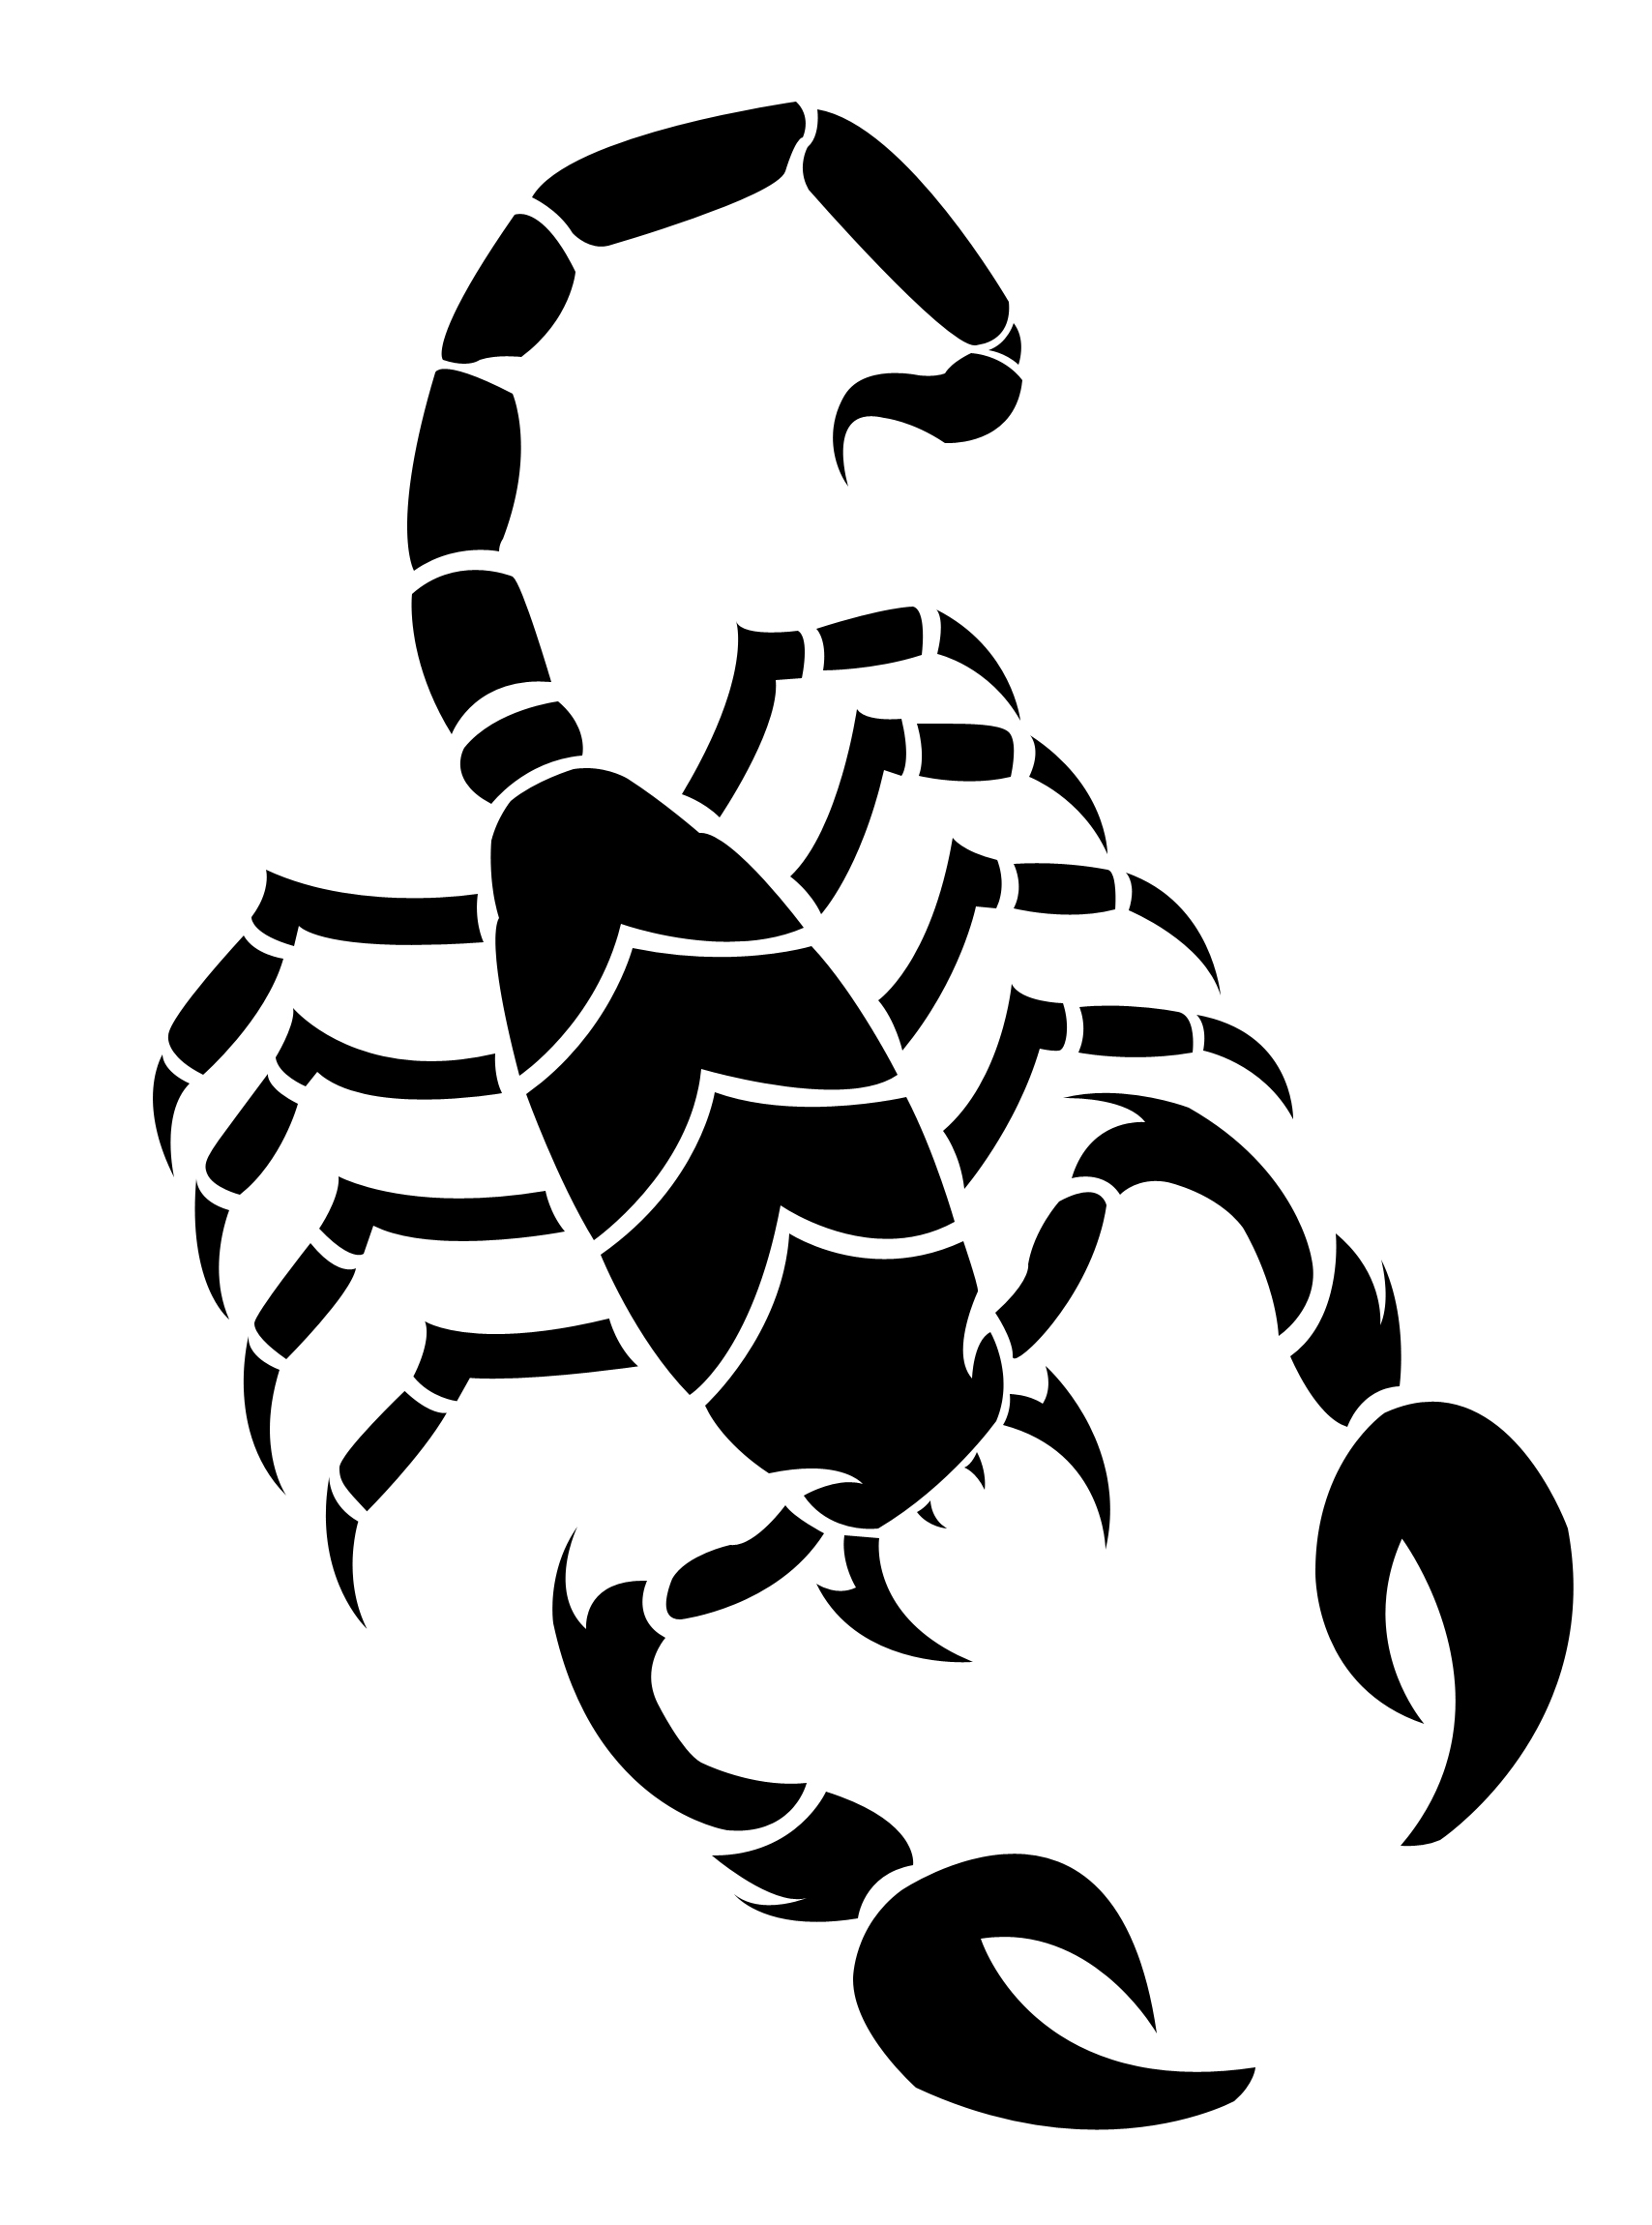 Scorpion drawing clipart - Scorpion Clipart